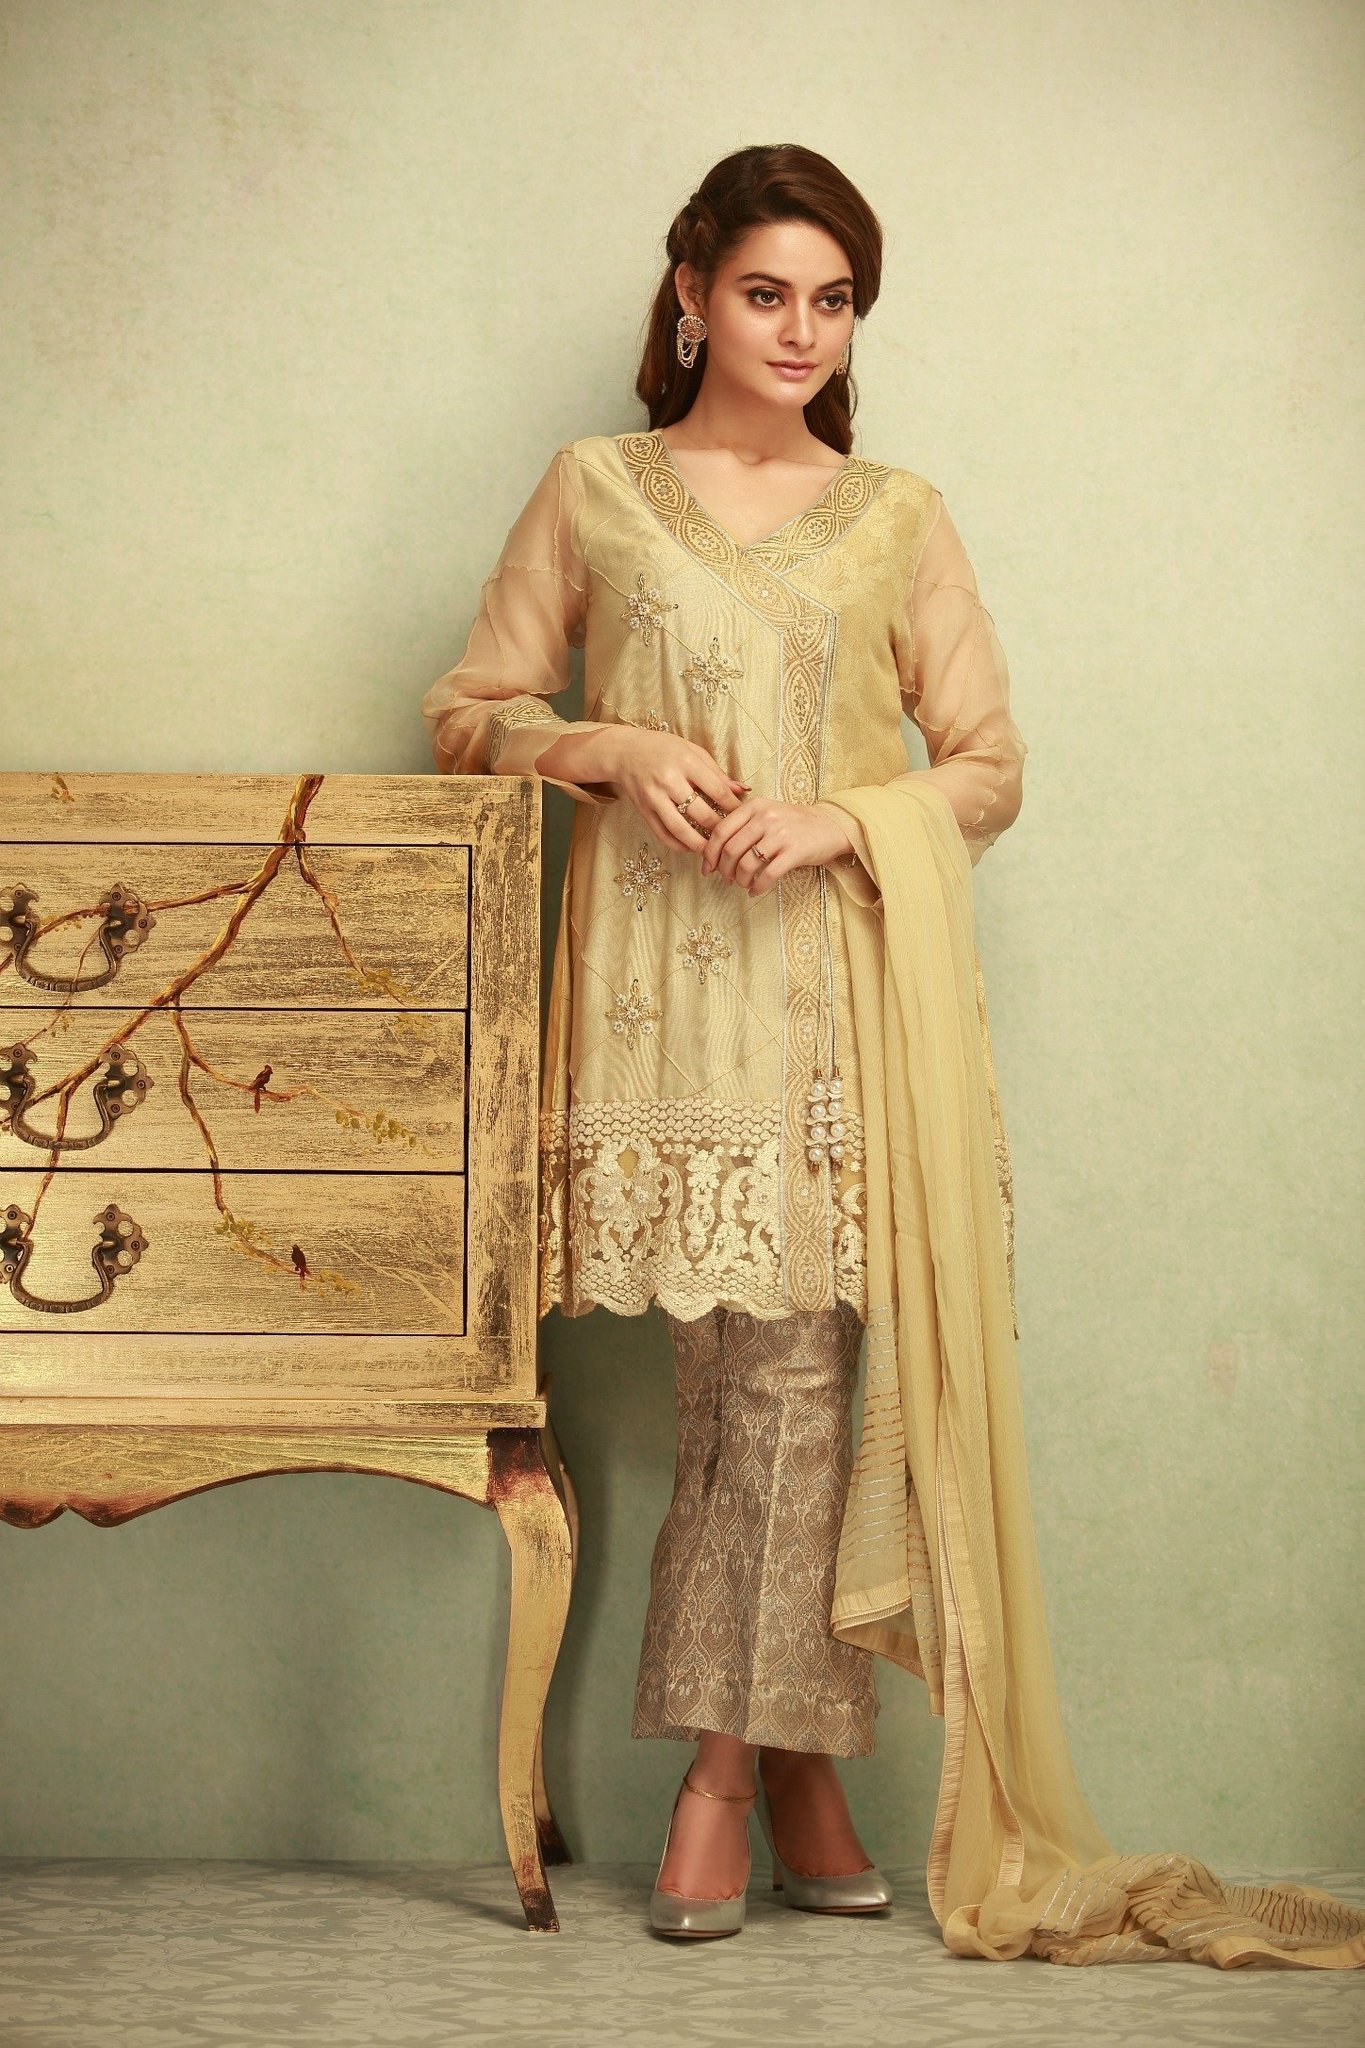 Embroidered Wedding Dress by Pakistani Designer Phatyma Khan